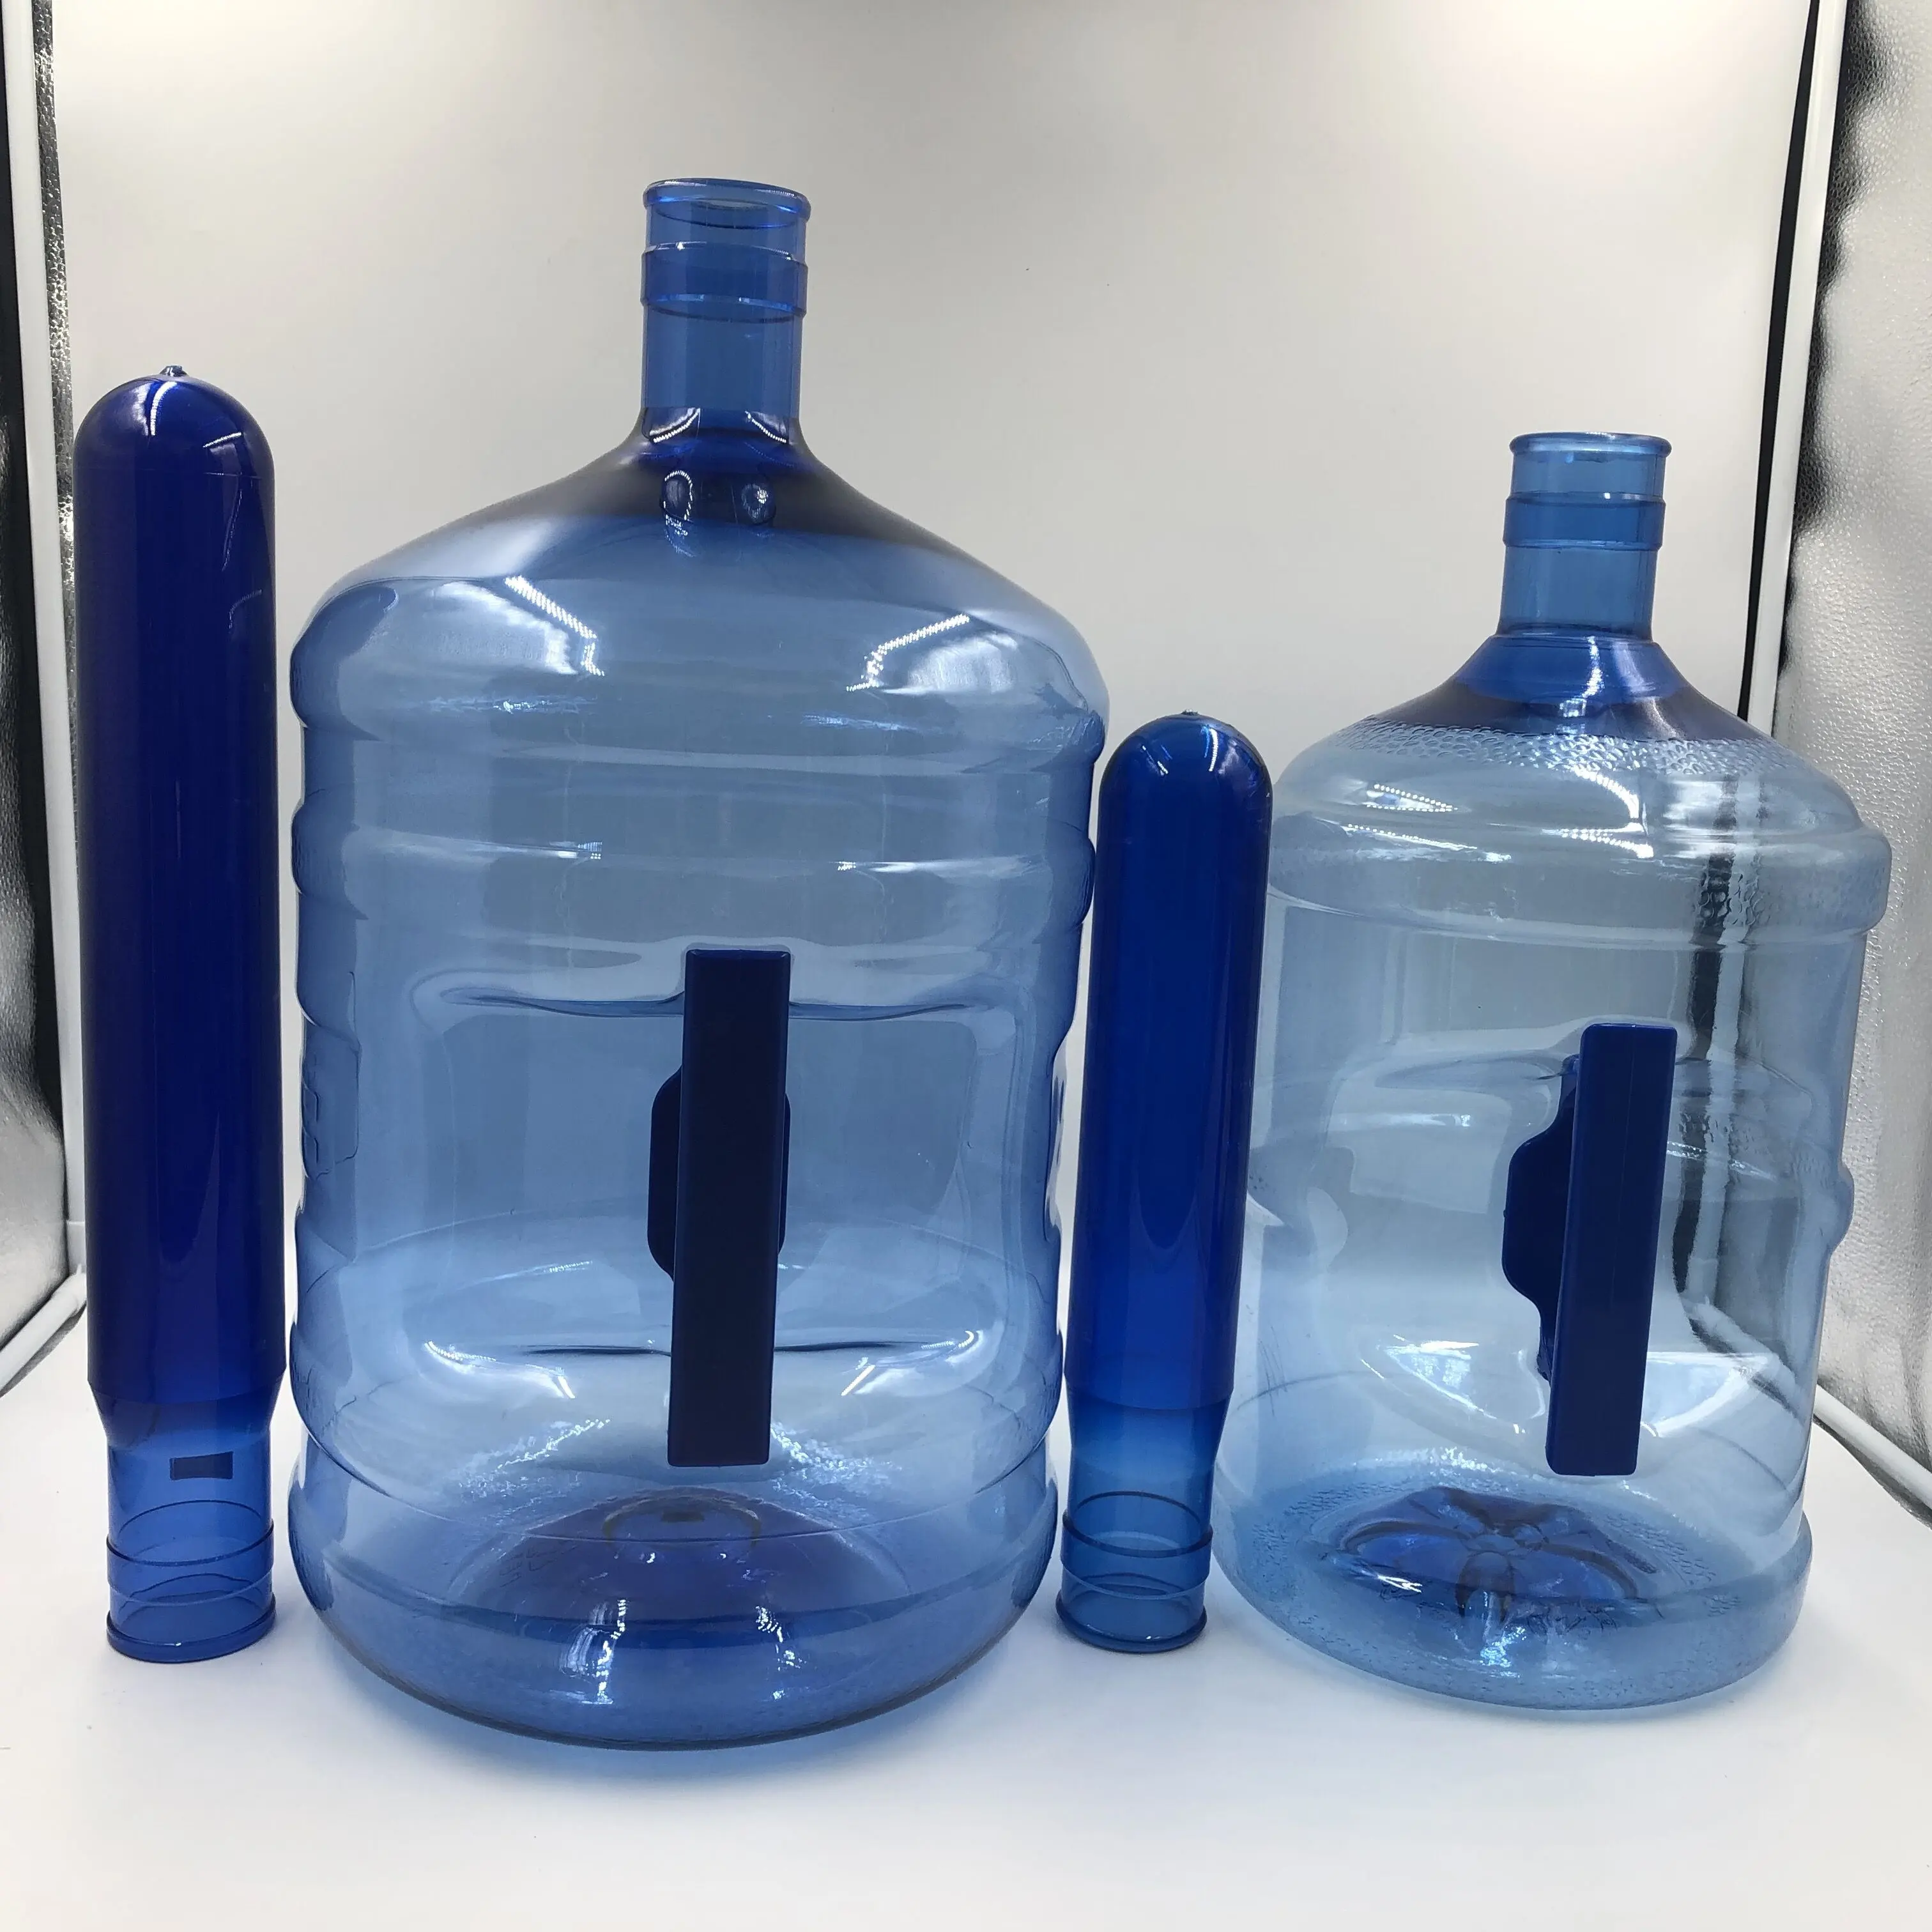 3 gallon 5 gallon PET preforms/20 liter Bottle Preform 480g 550g 600g 650g 680g700g 730g 750g water bottle preforms